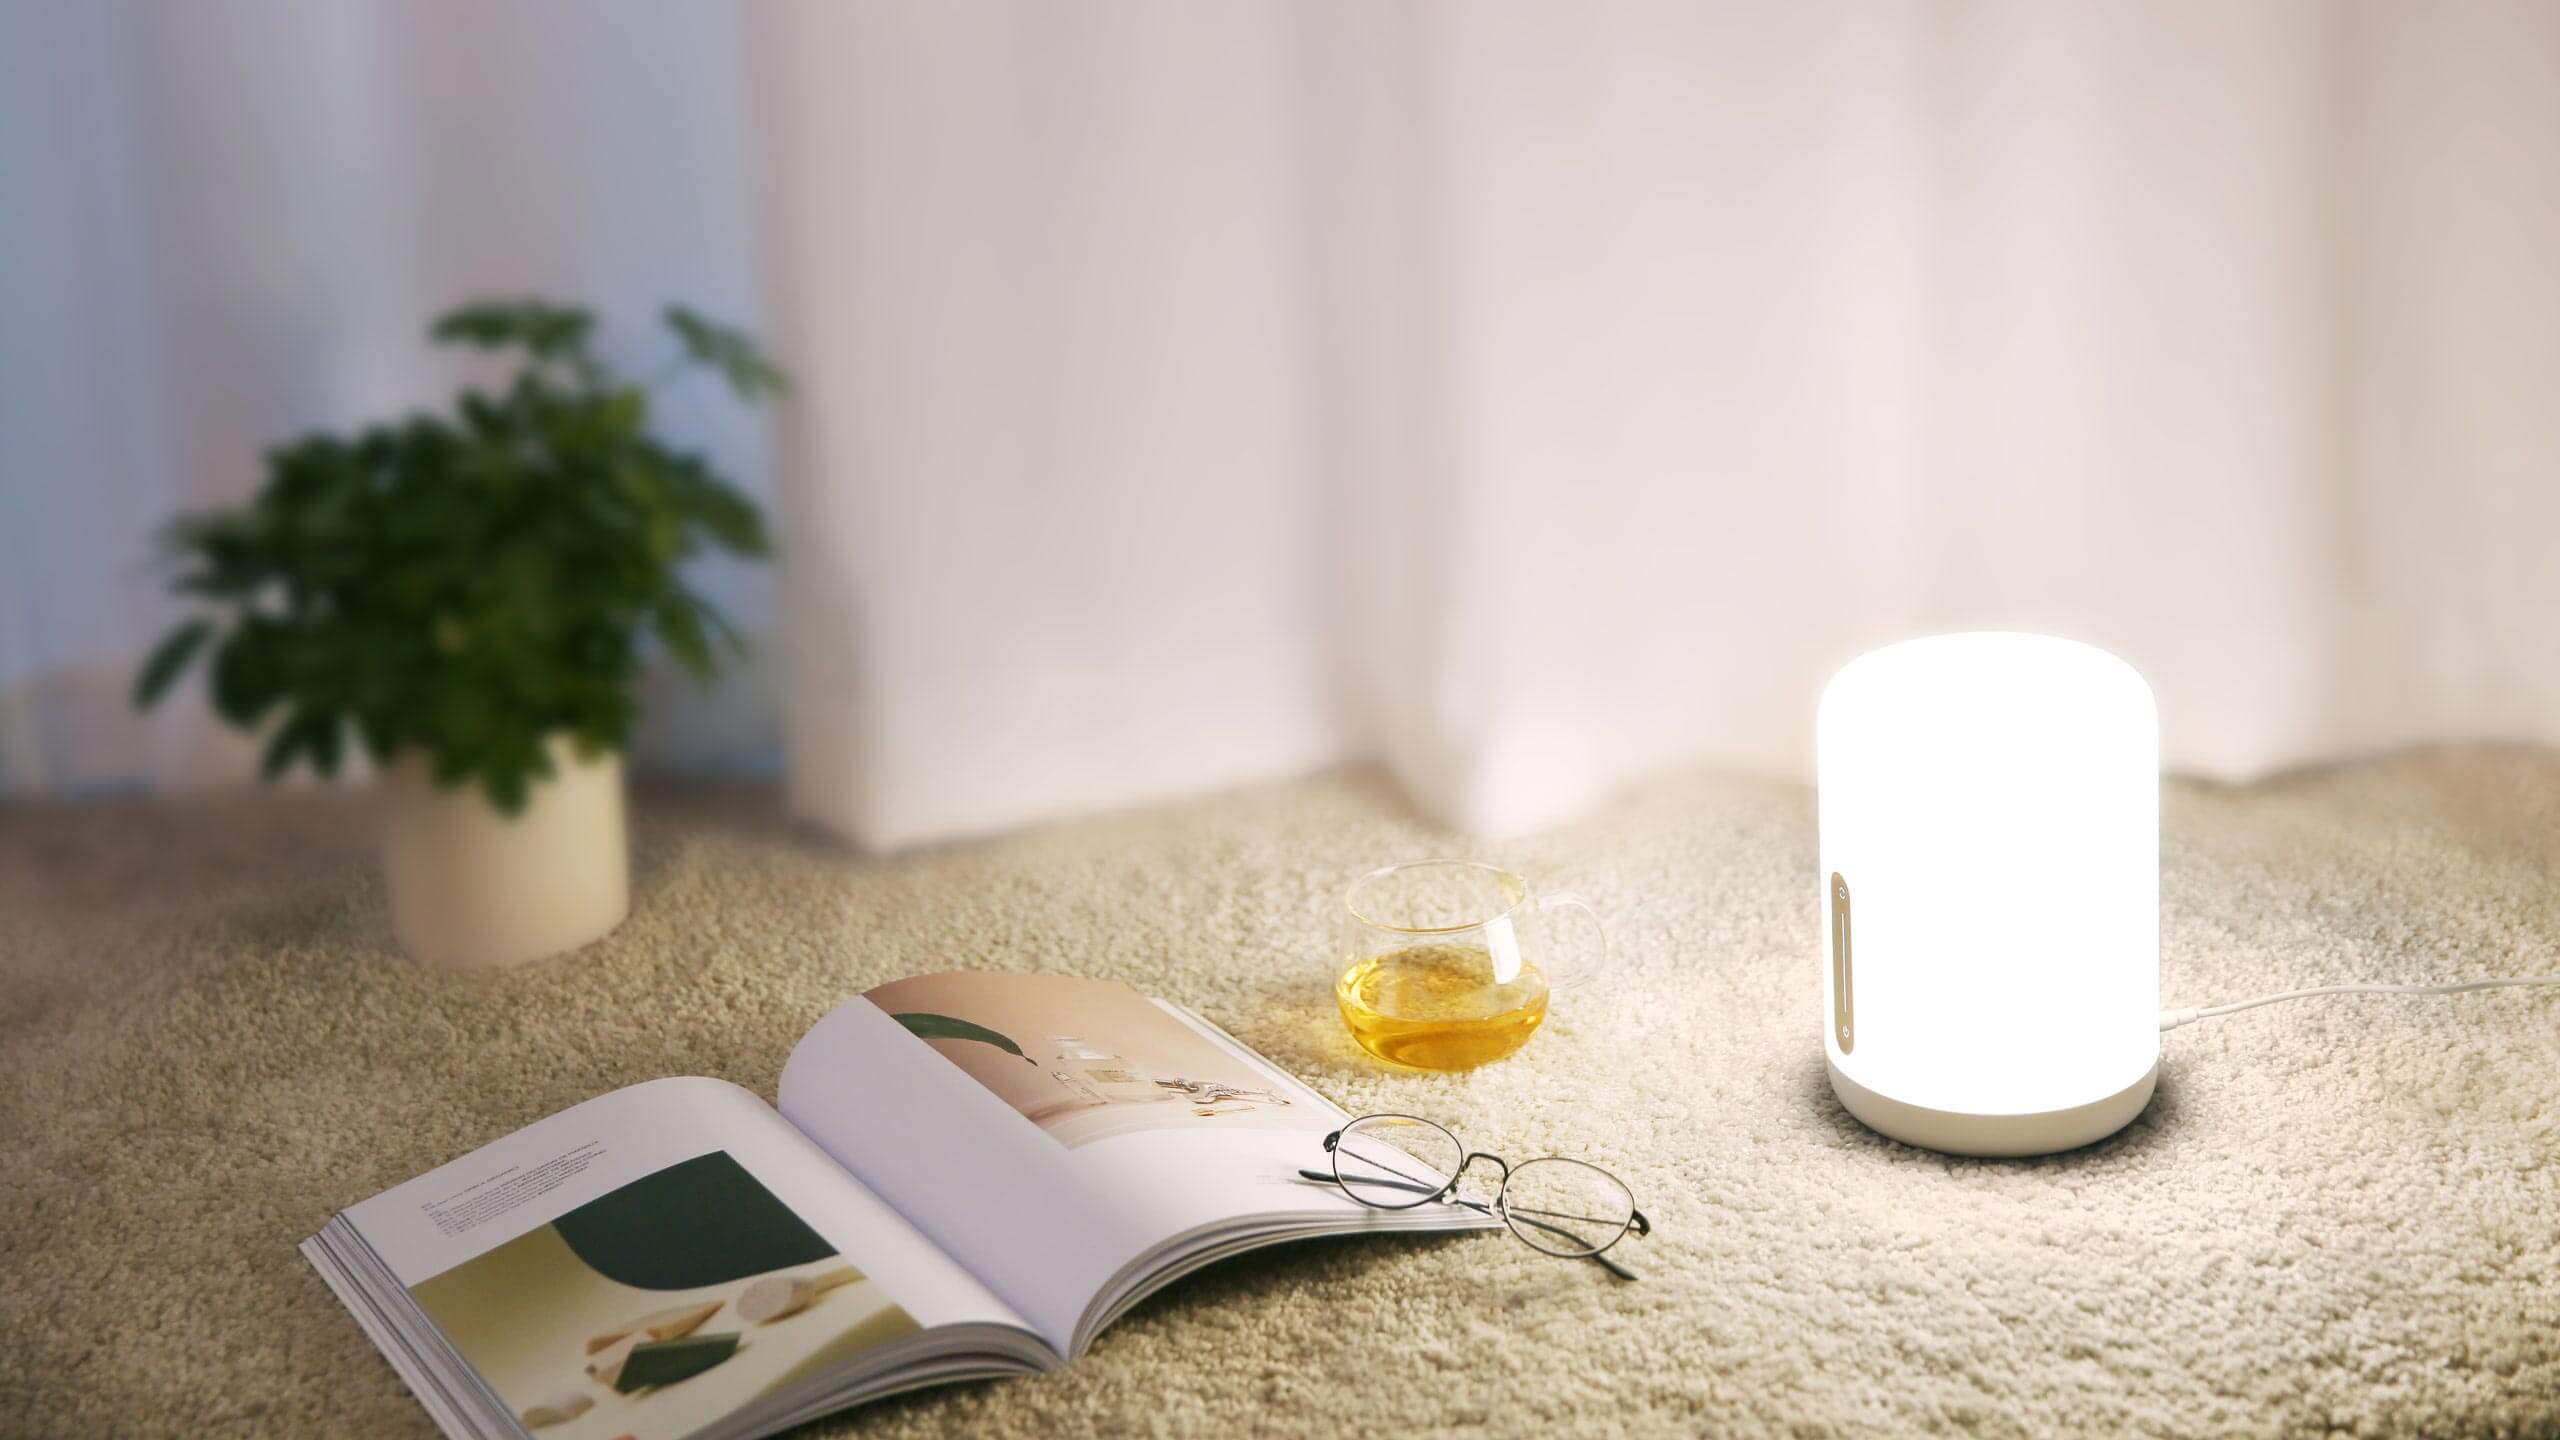 Ночник Xiaomi mi Bedside Lamp 2